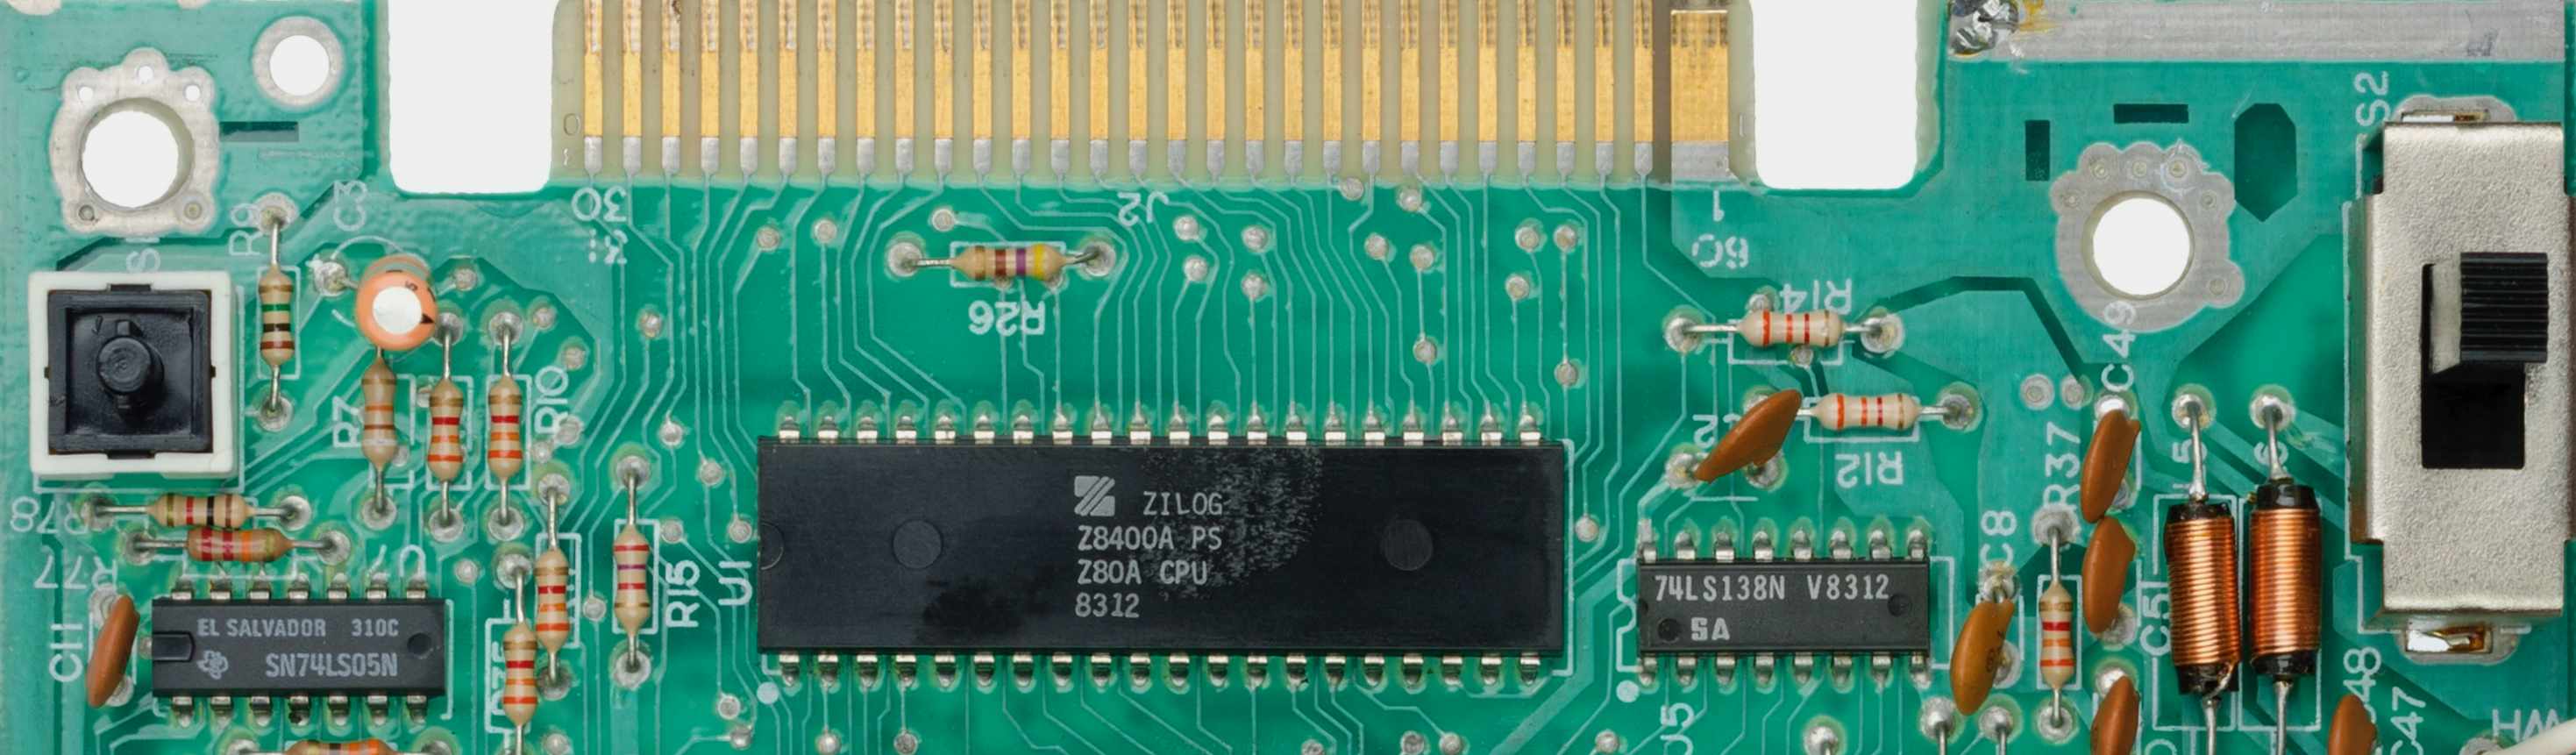 Colecovision CPU